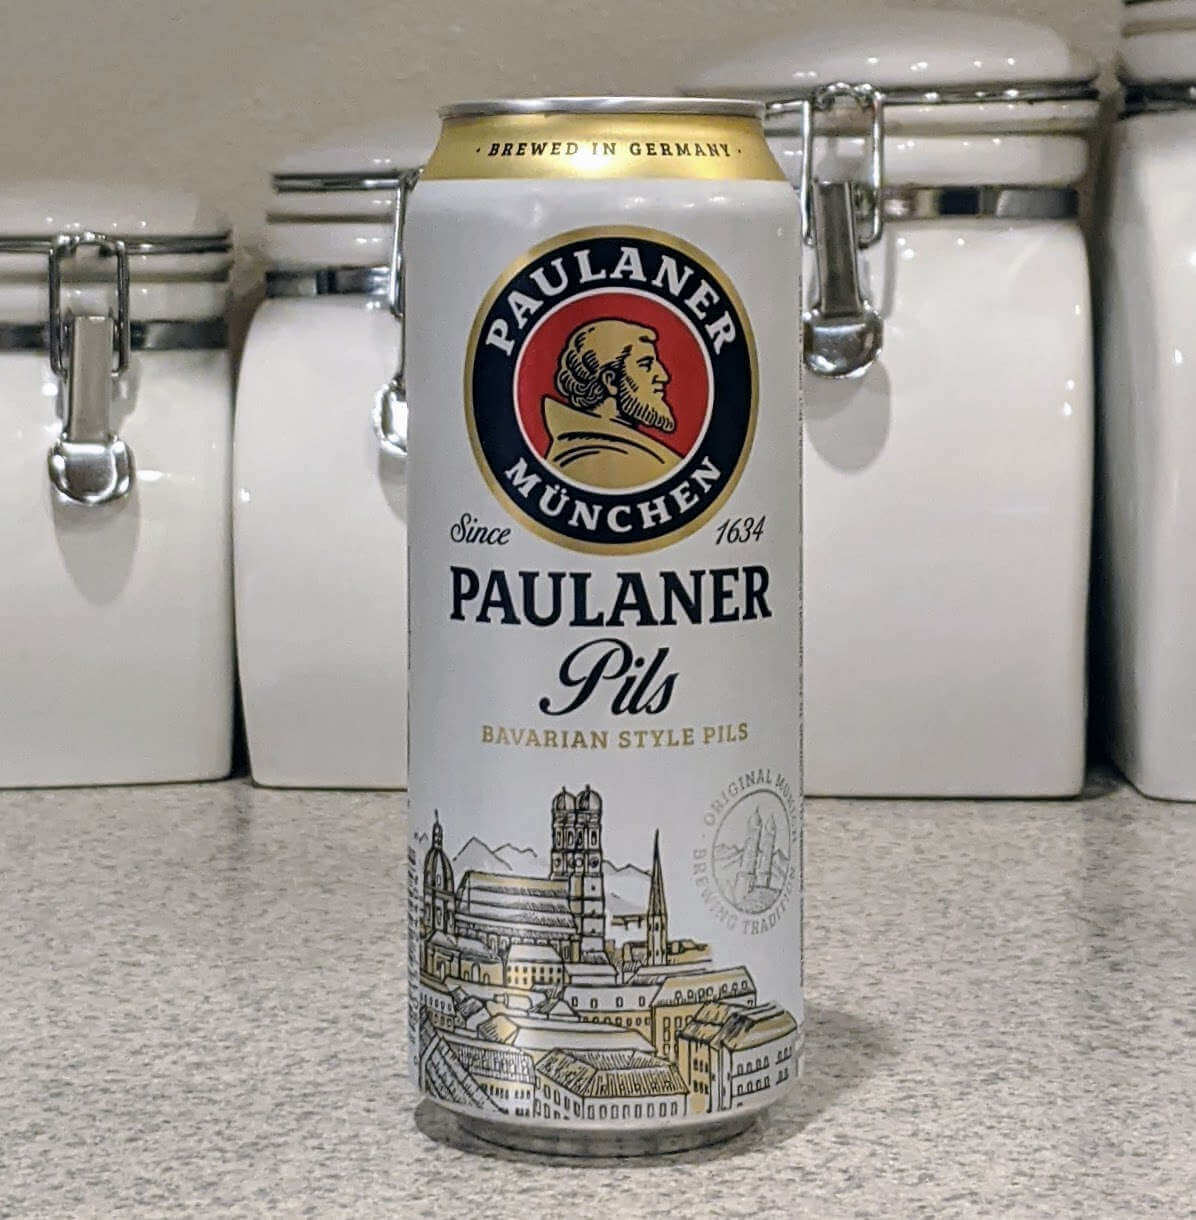 Received: Paulaner Pils, a classic German Pilsner